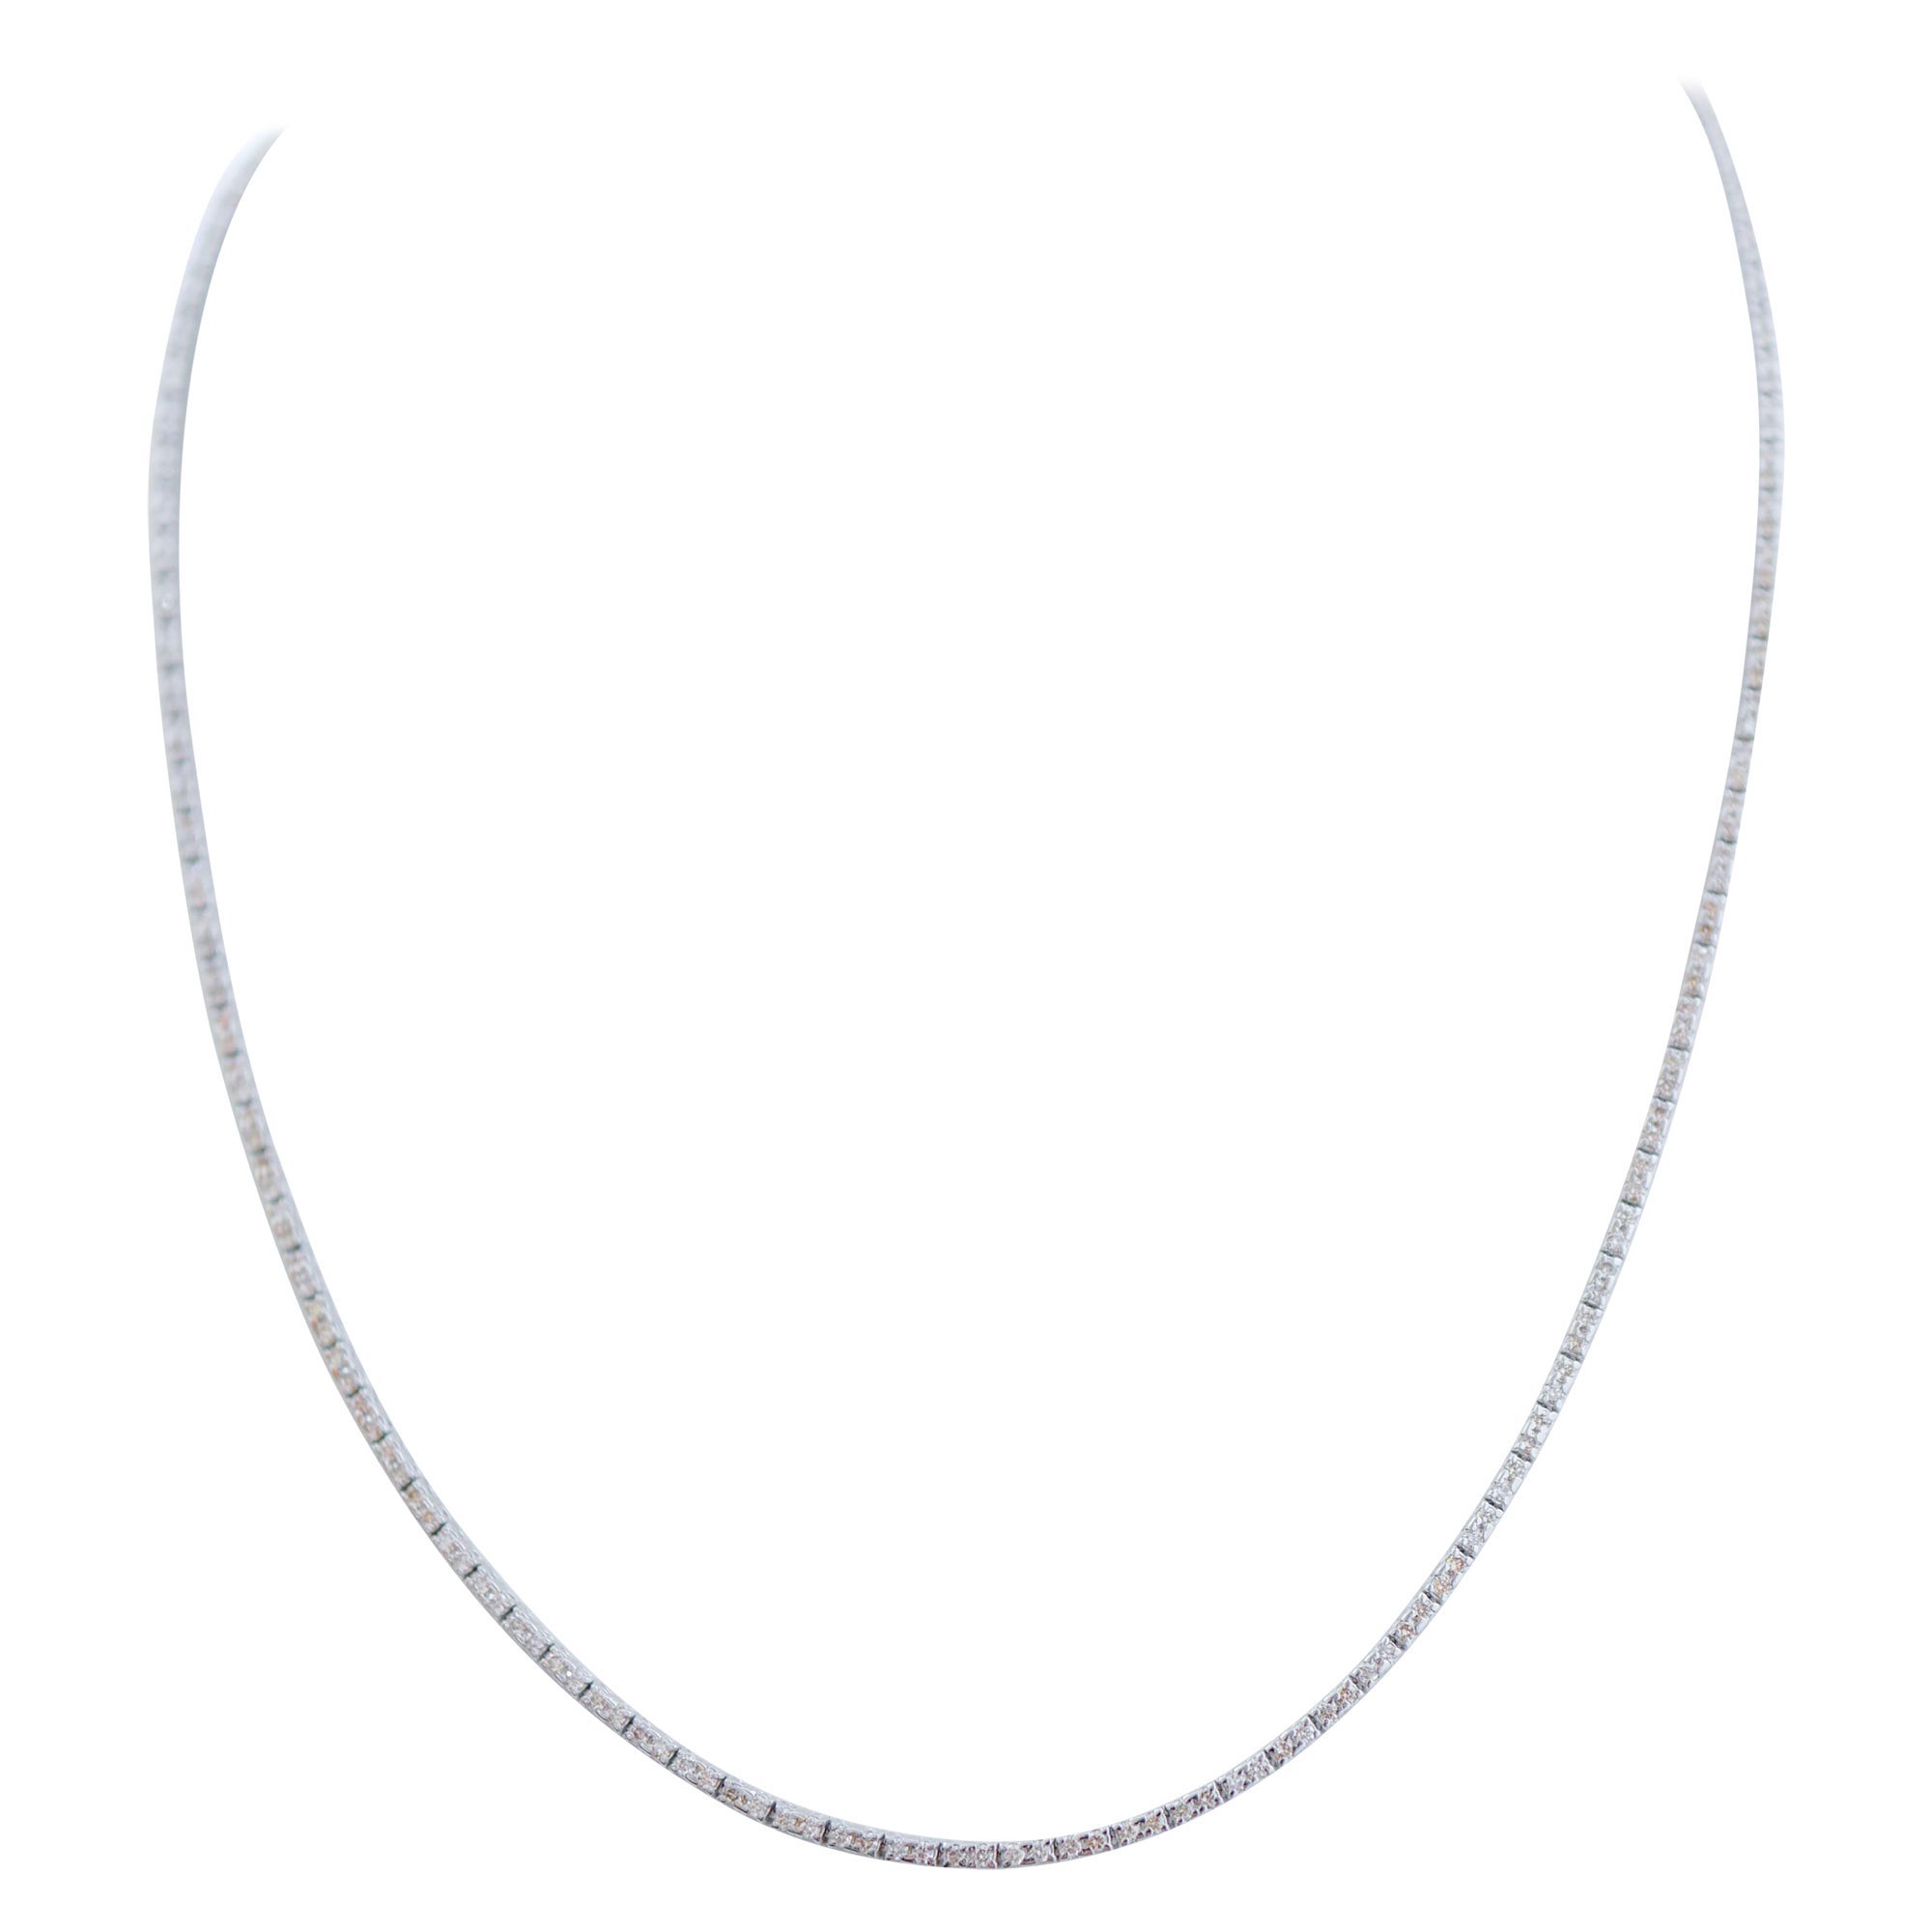 Diamonds, 18 Karat White Gold Tennis Necklace. For Sale